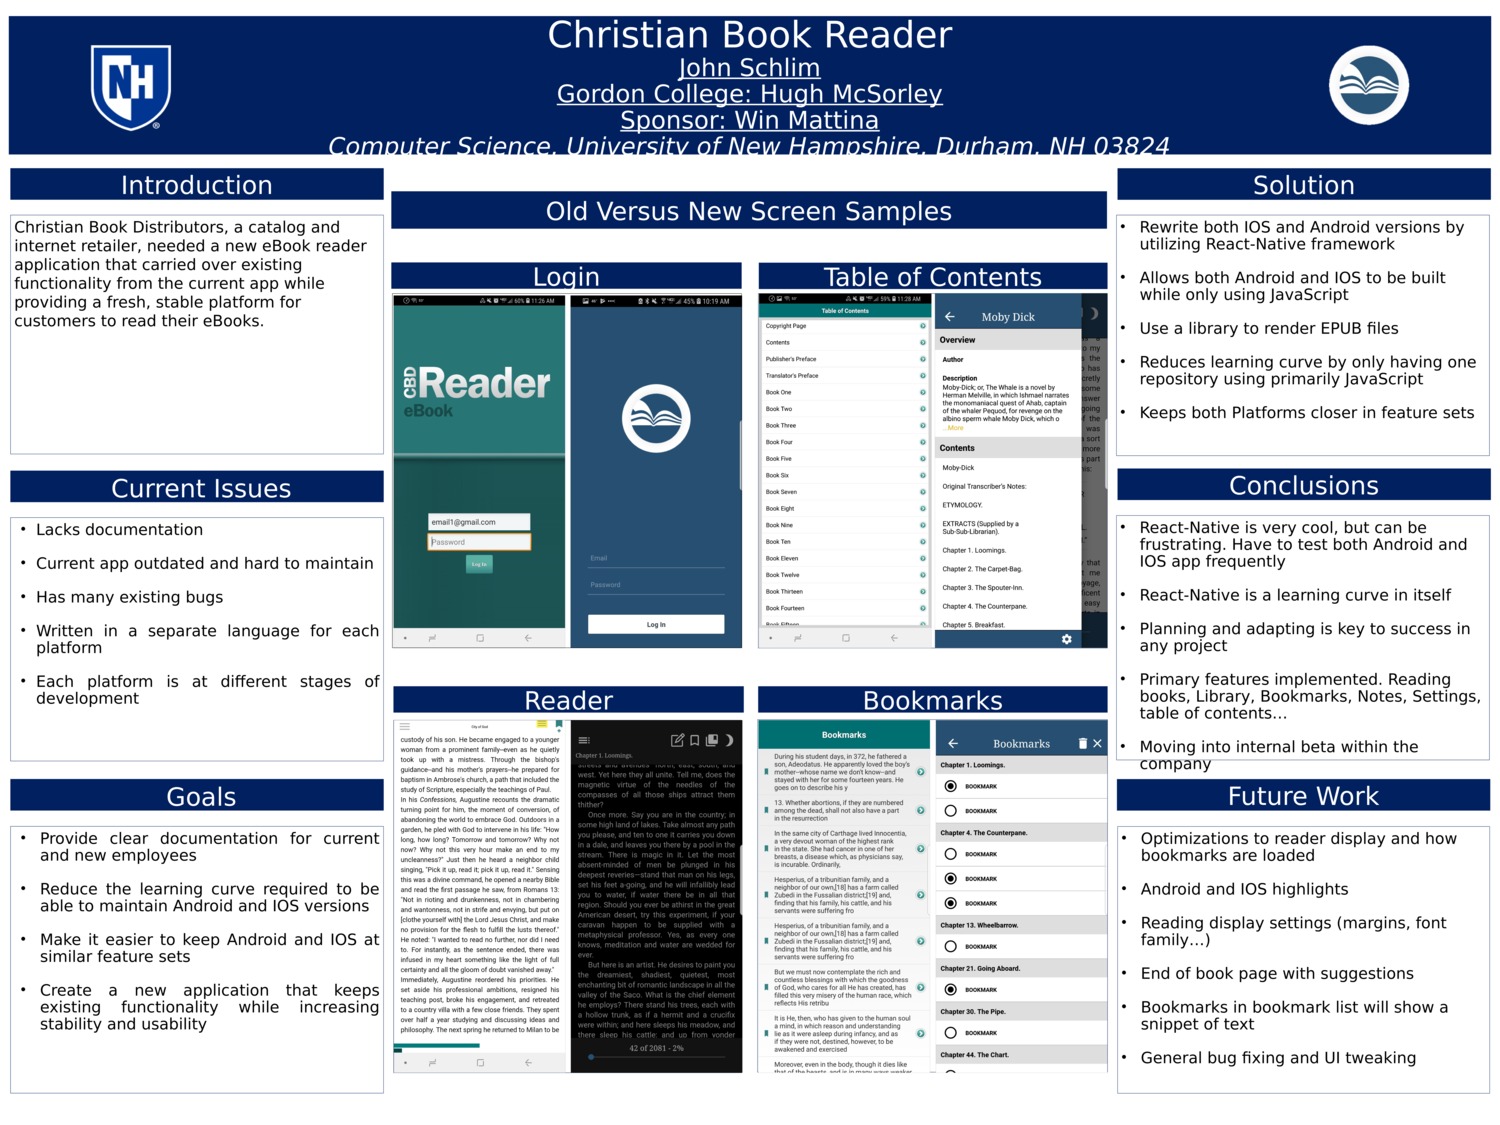 Christian Book Reader by jws1014